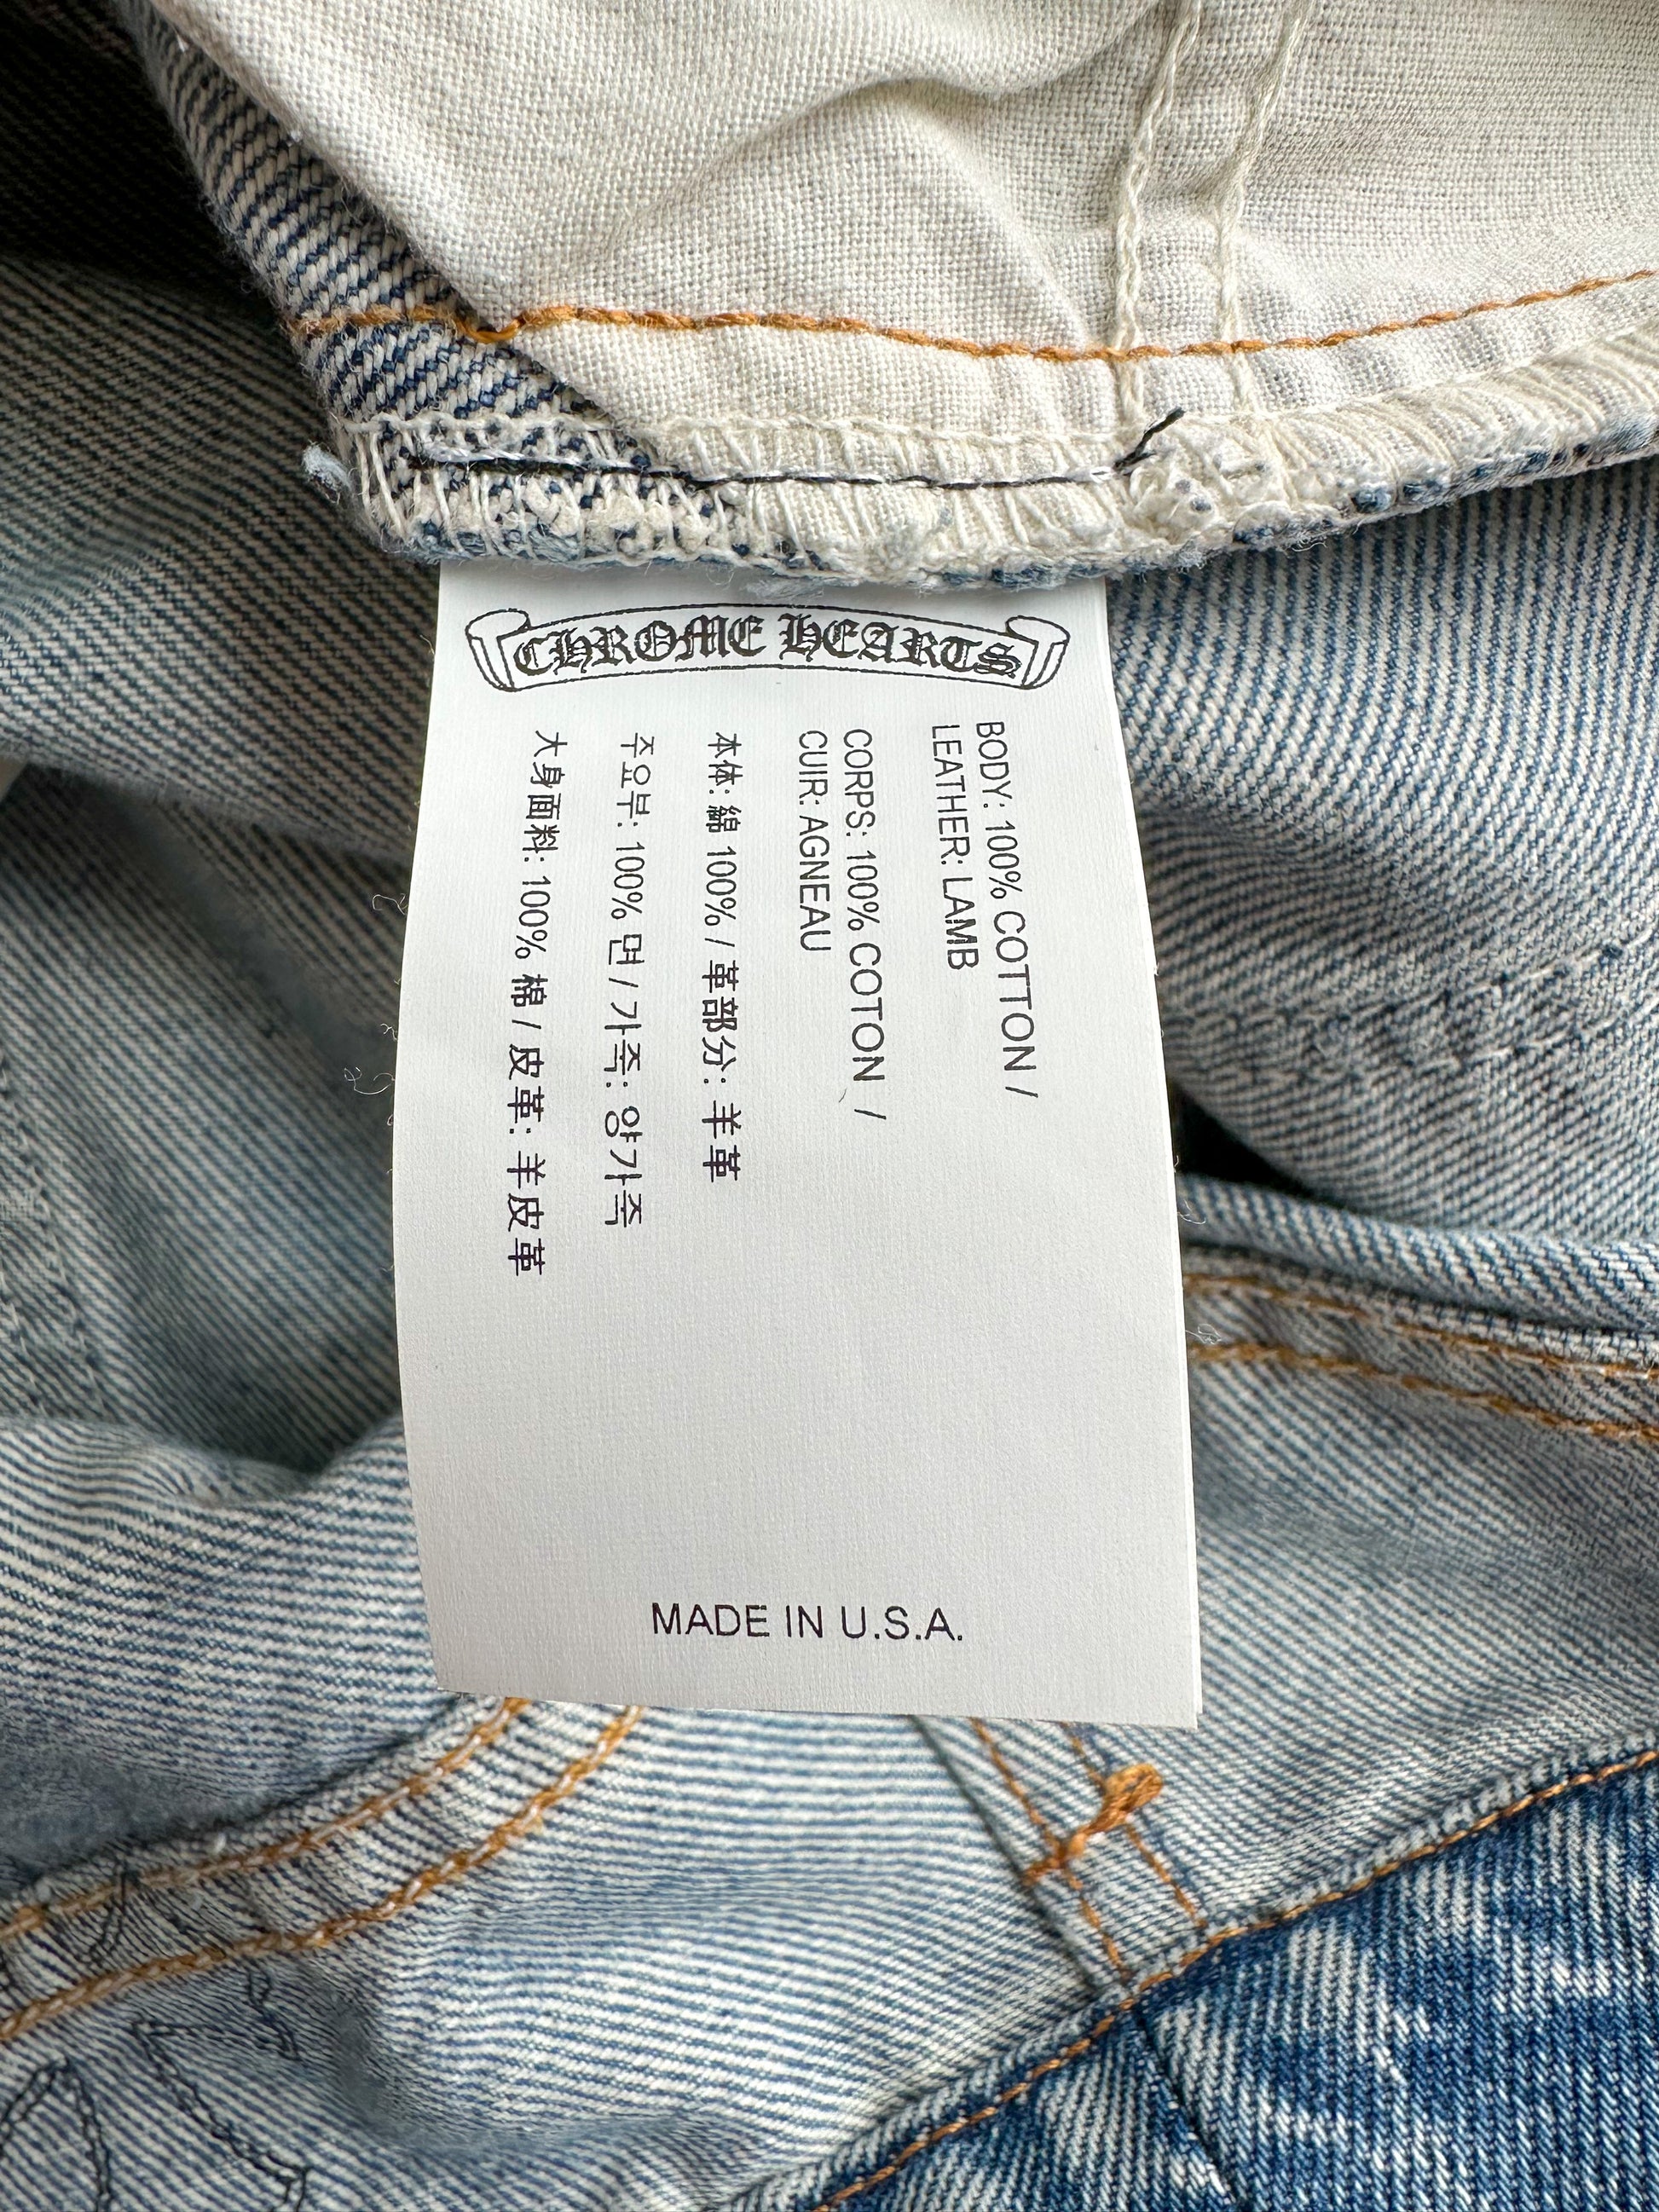 Black chrome hearts jeans size 34